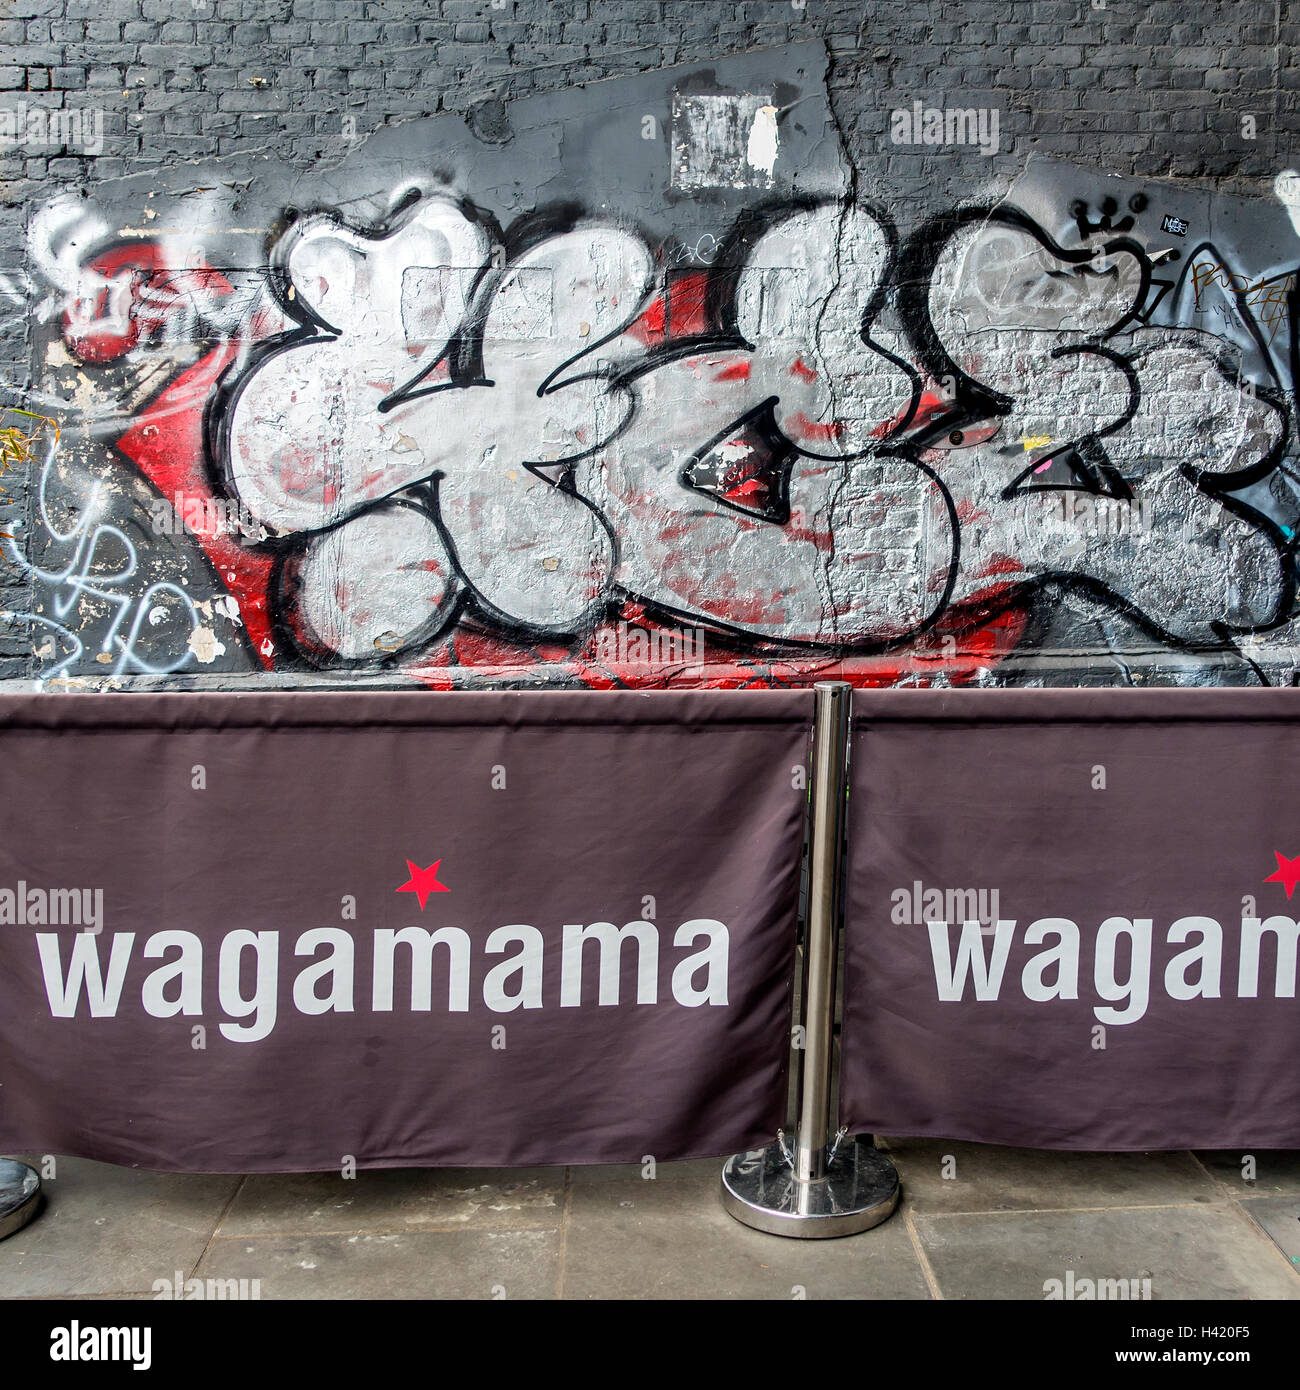 Wagamama Restaurant and Graffiti South Bank London England Stock Photo